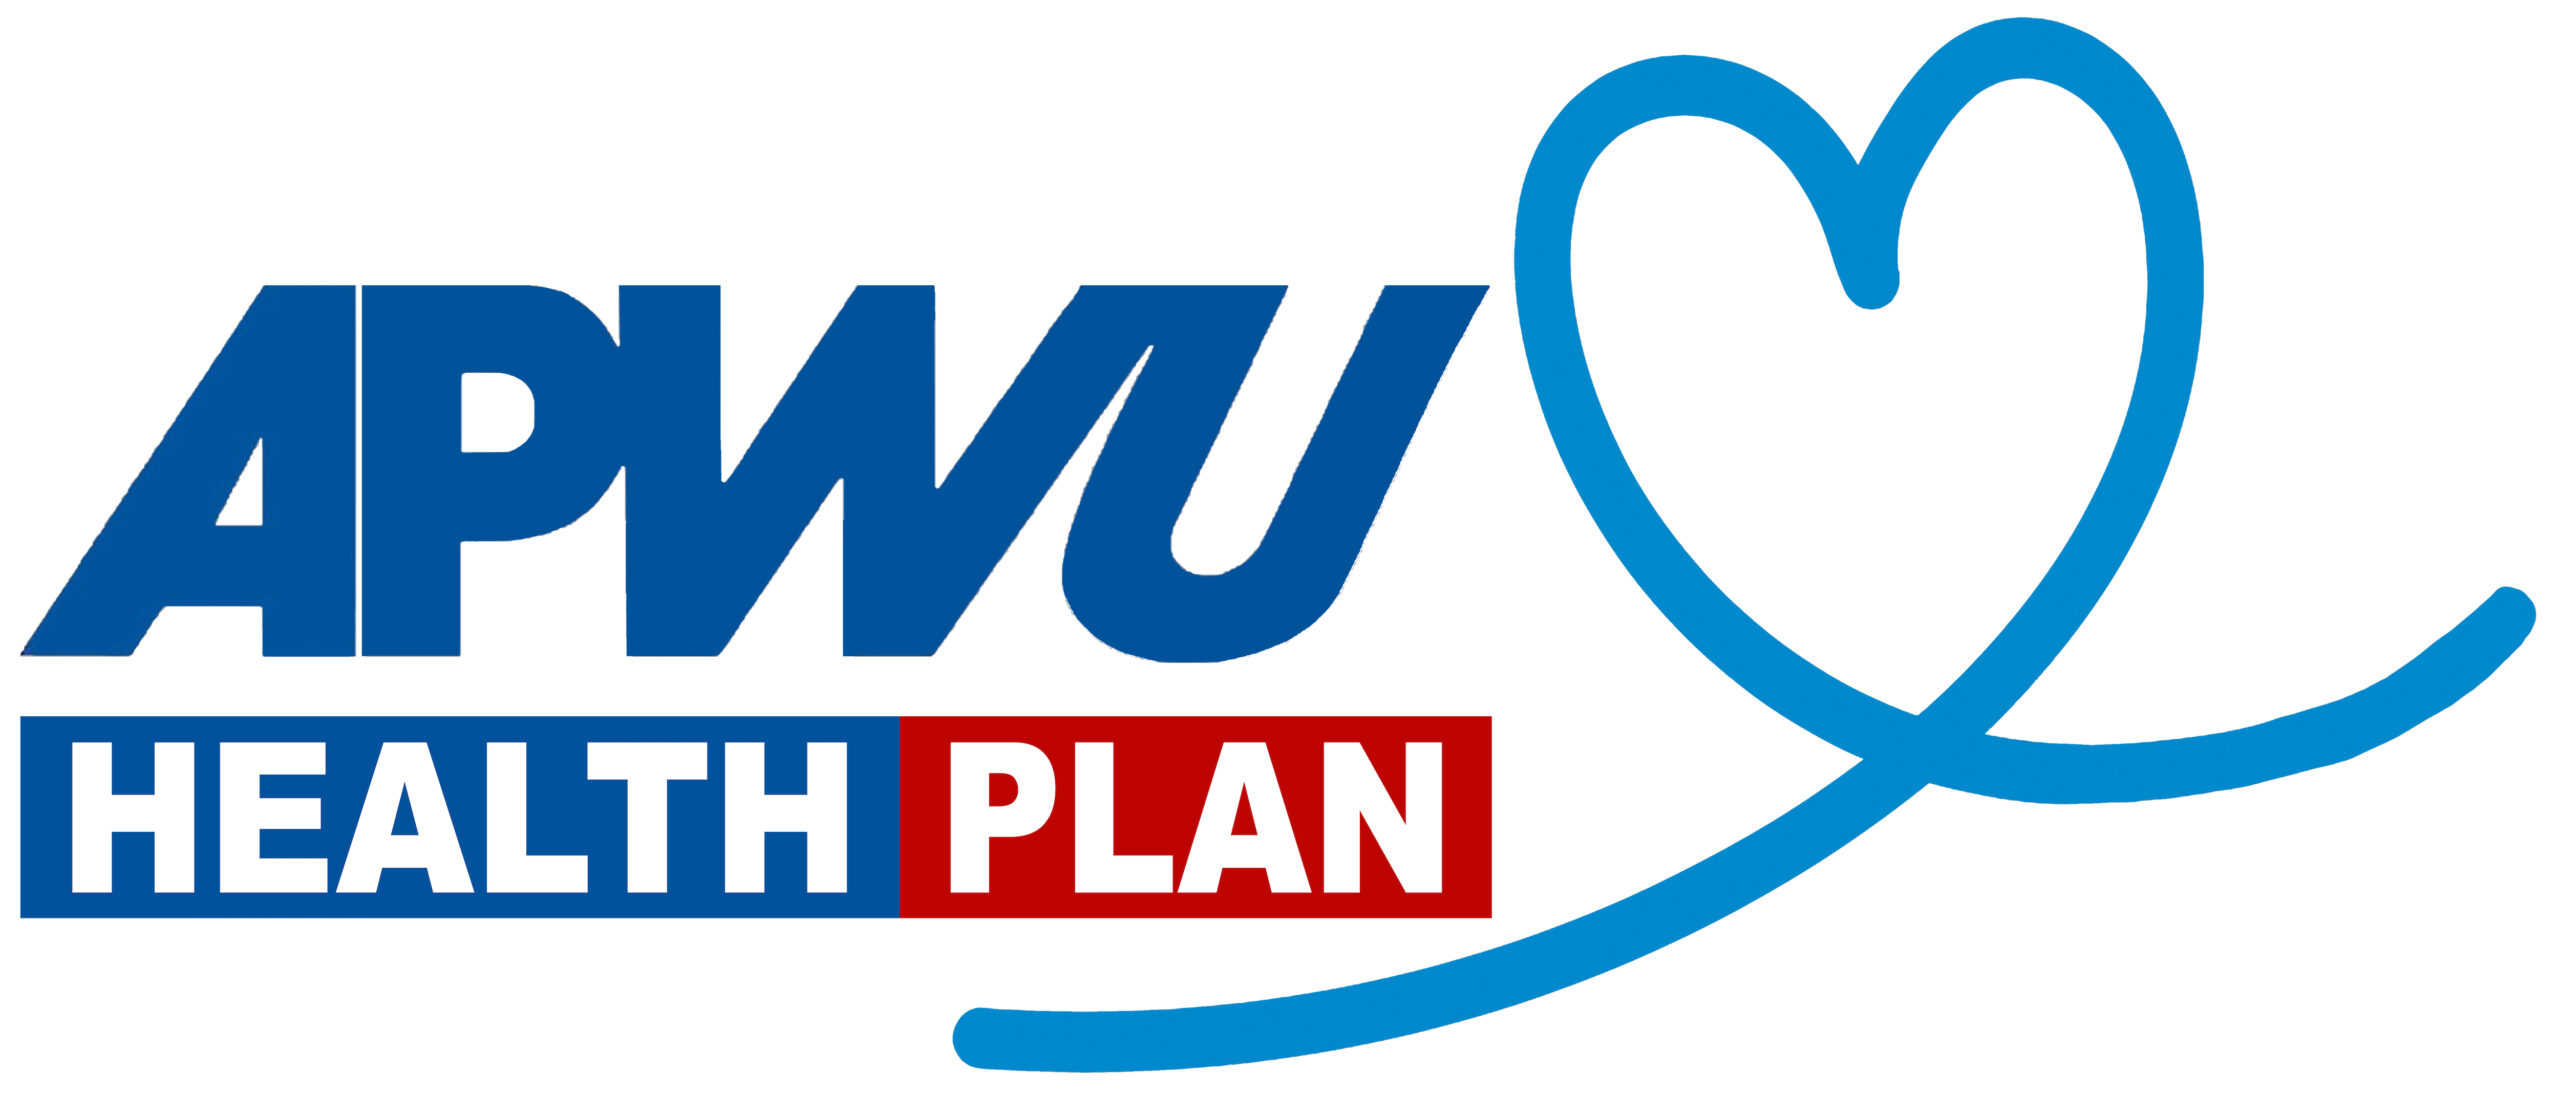 APWU Health Plan